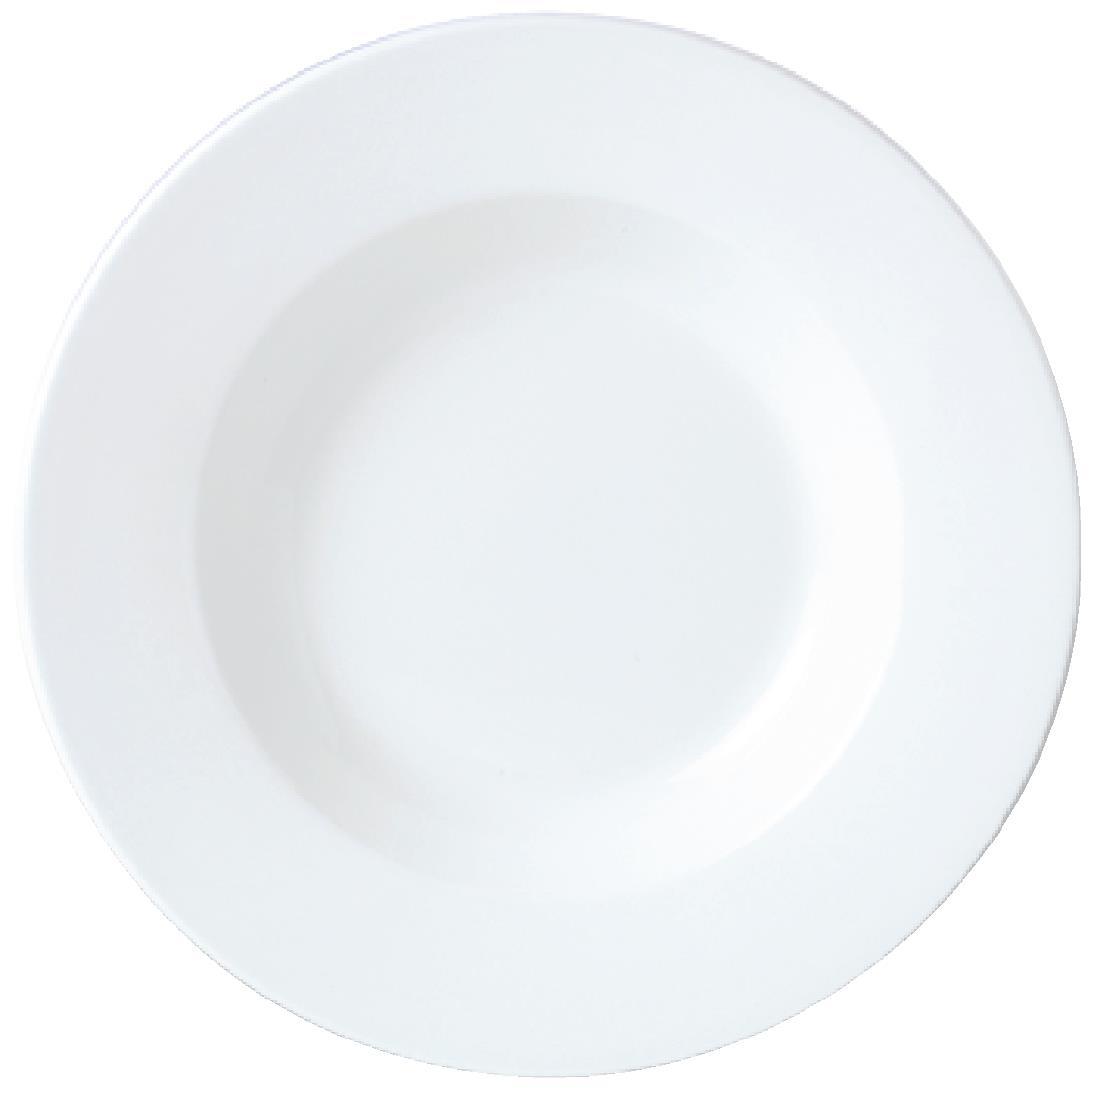 Steelite Simplicity White Pasta Dishes 270mm (Pack of 12) - V0144  - 1